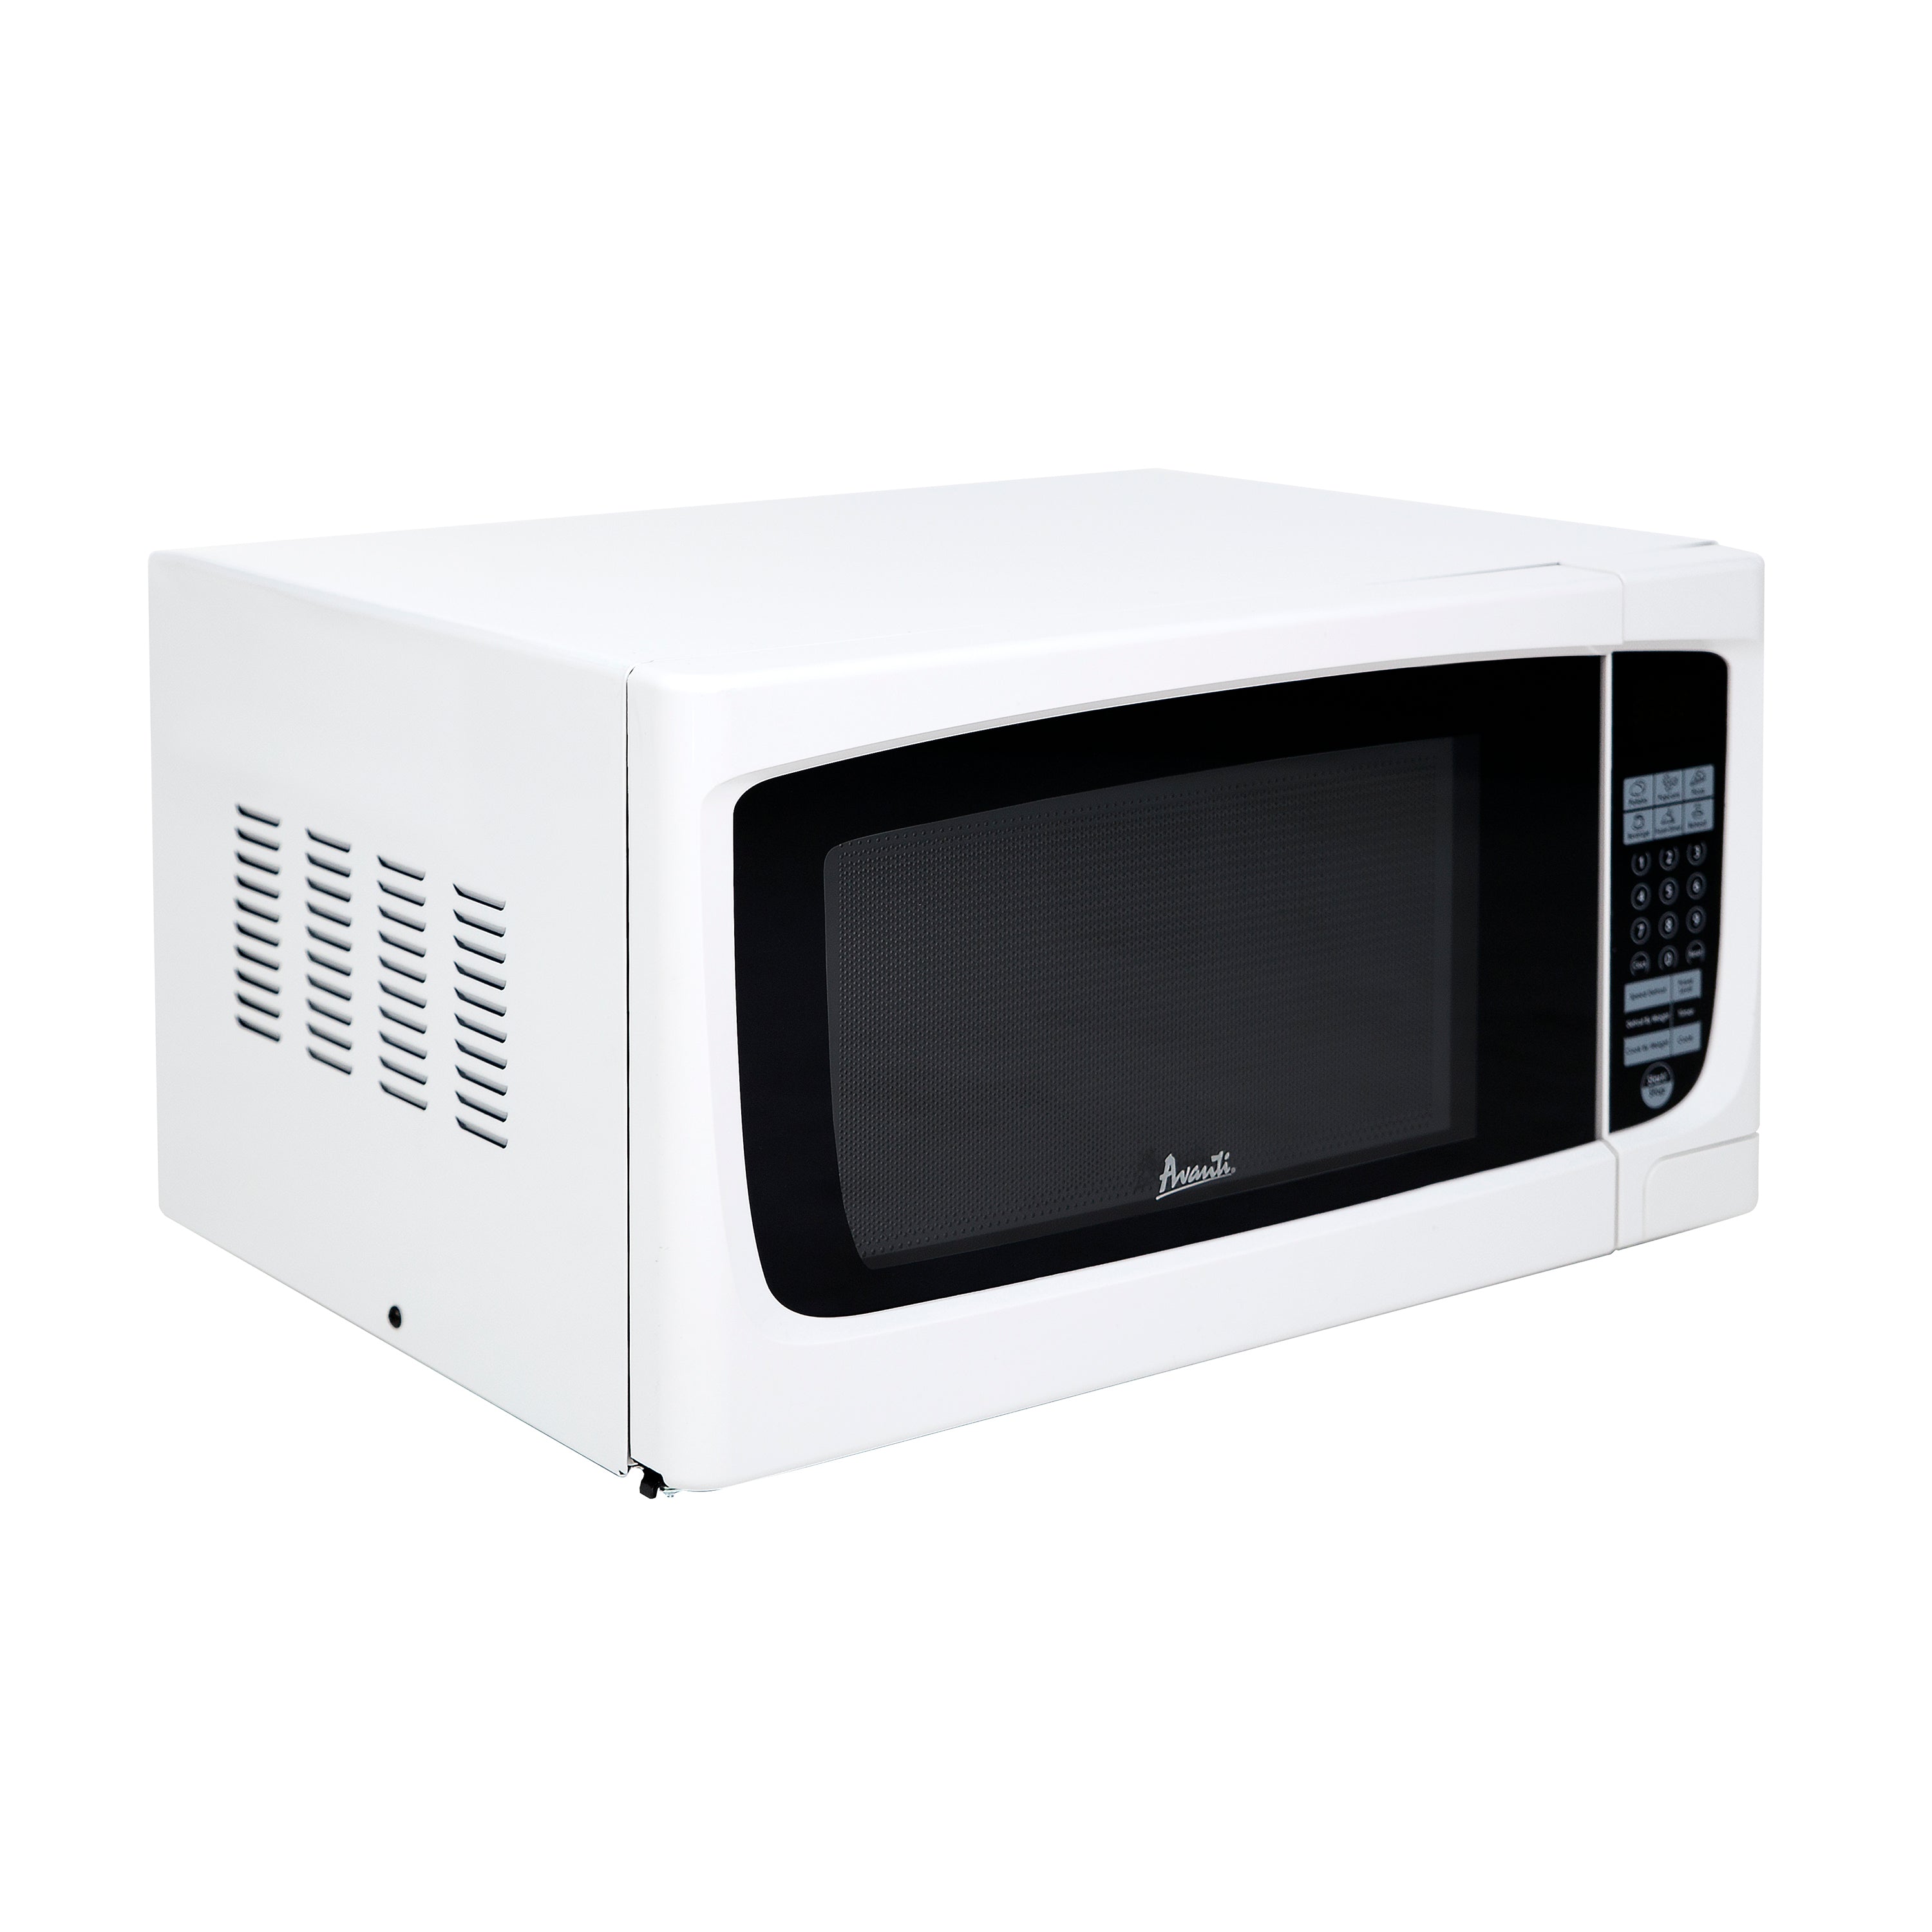 Avanti - MO1450TW, Avanti 1.4 cu. ft. Microwave Oven, in White